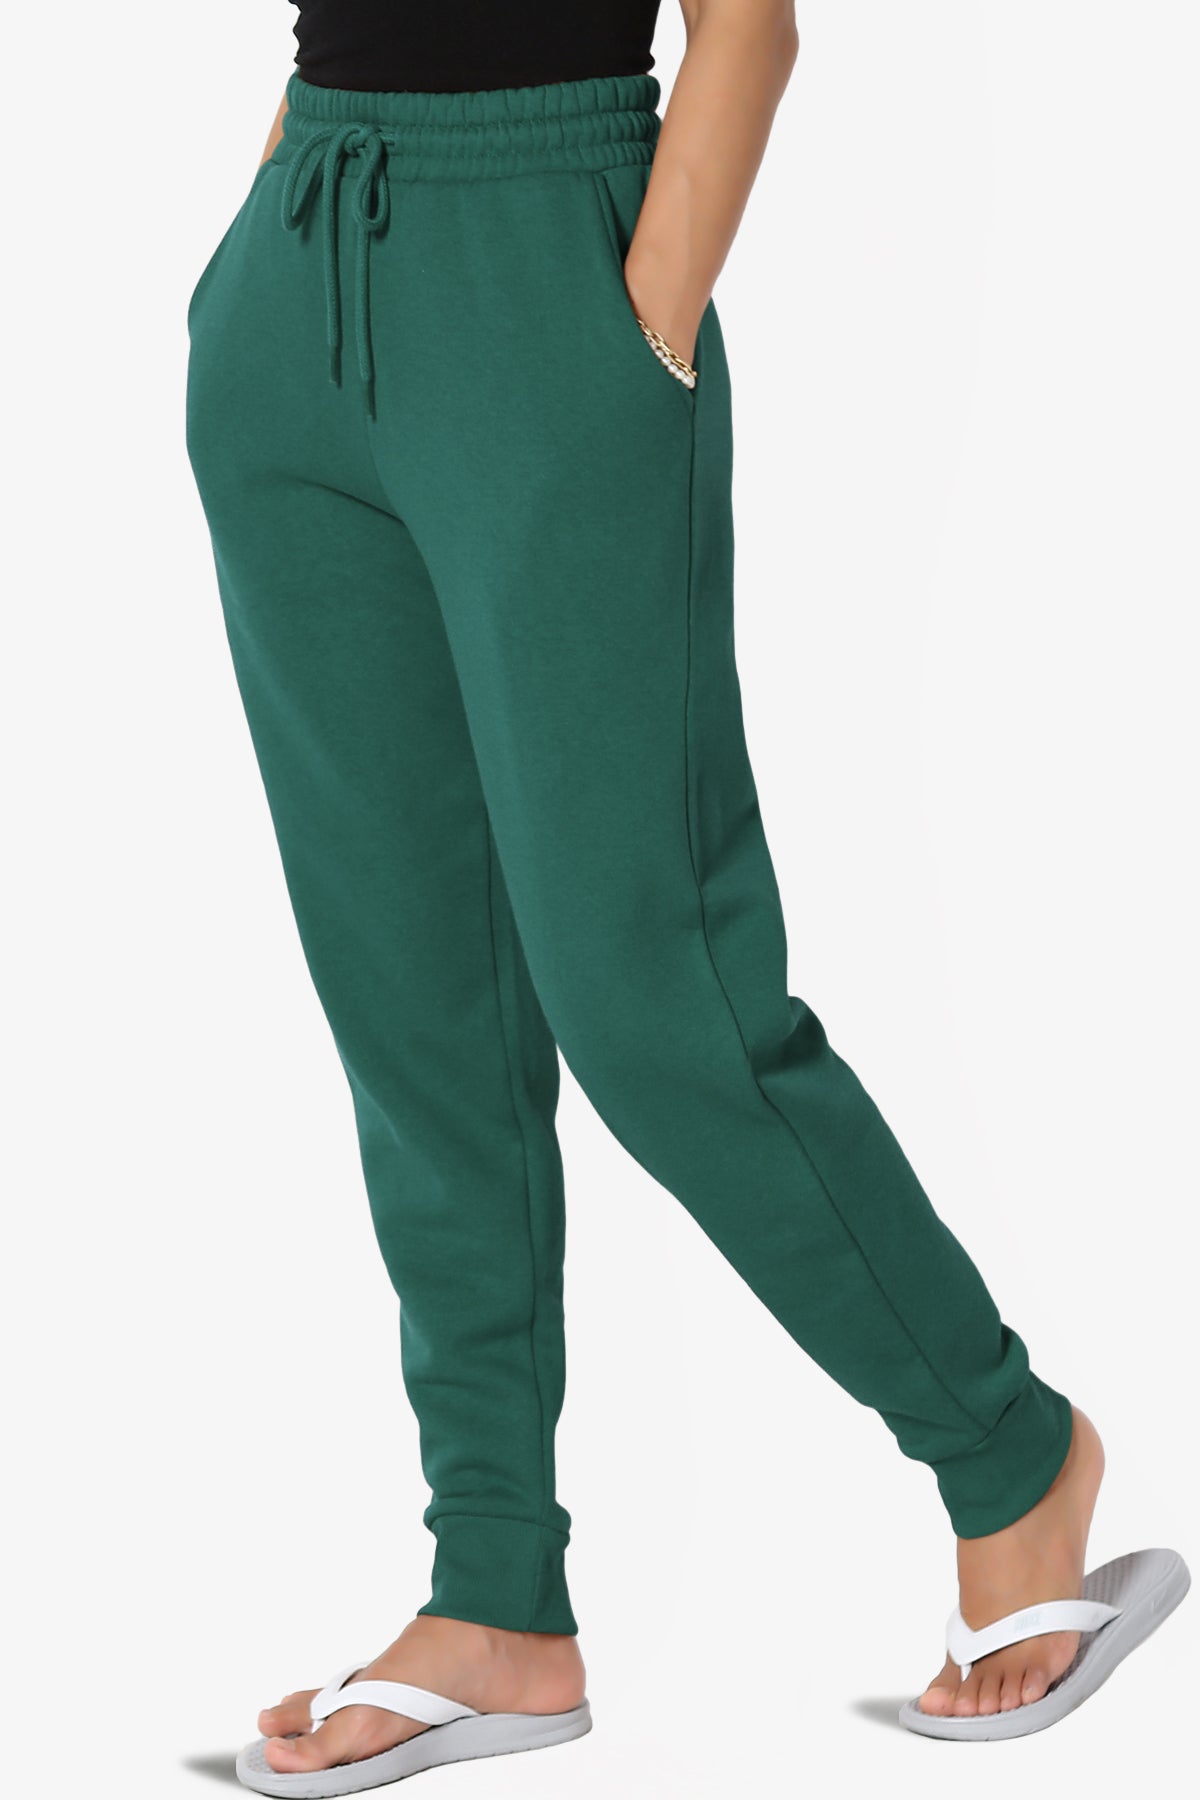 Majesda® - Solid Color Loose Drawstring Sweatpants